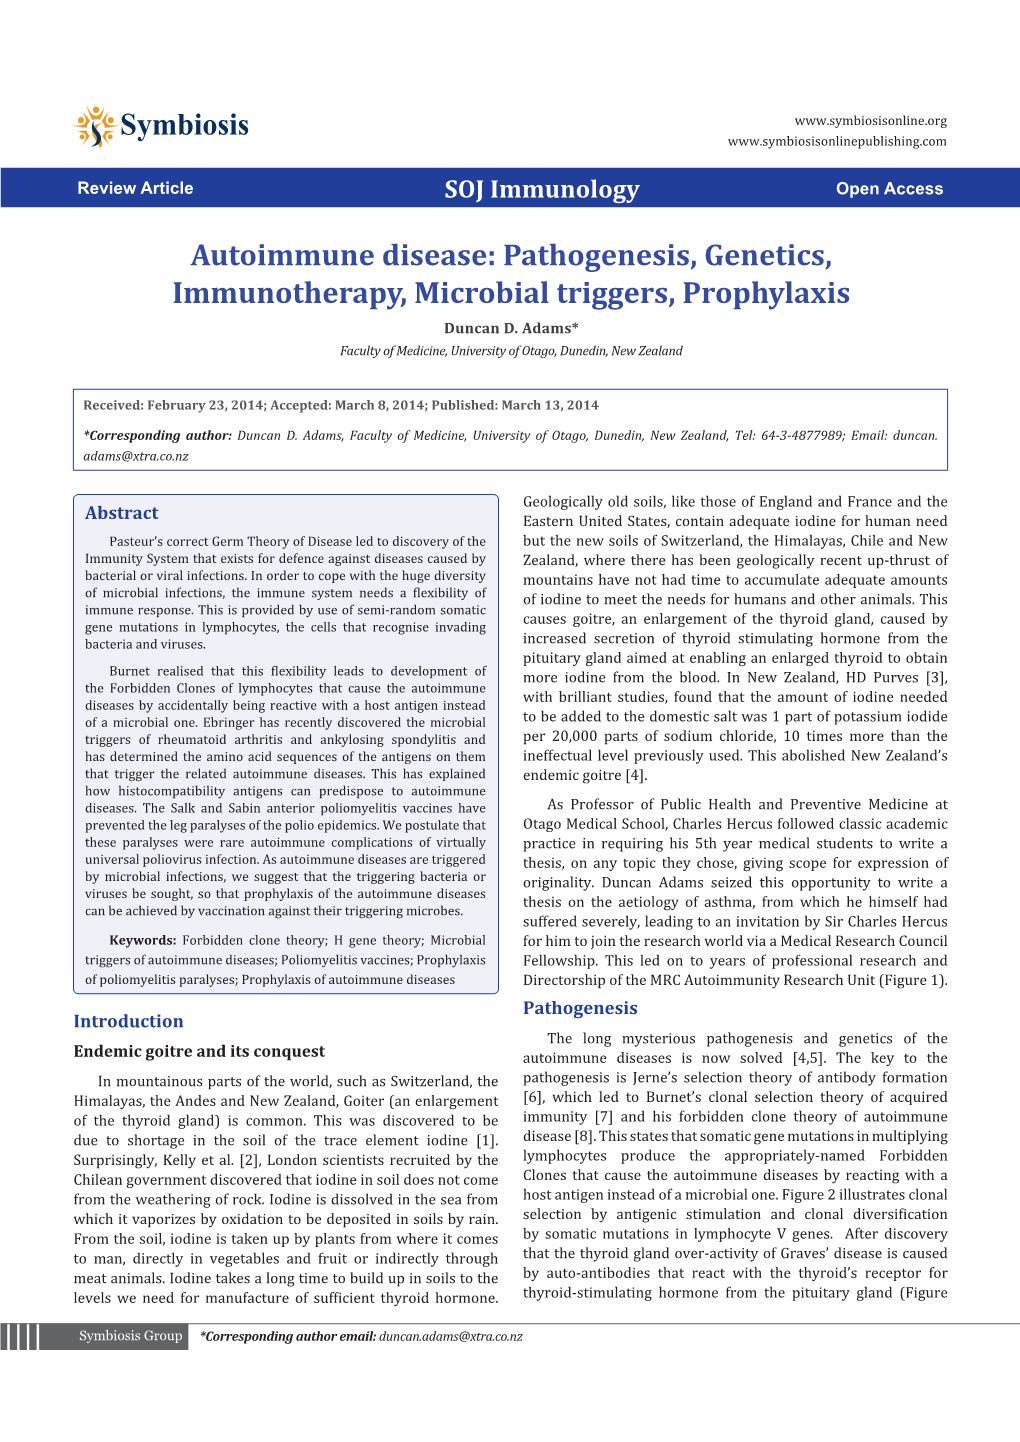 Autoimmune Disease: Pathogenesis, Genetics, Immunotherapy, Microbial Triggers, Prophylaxis Duncan D